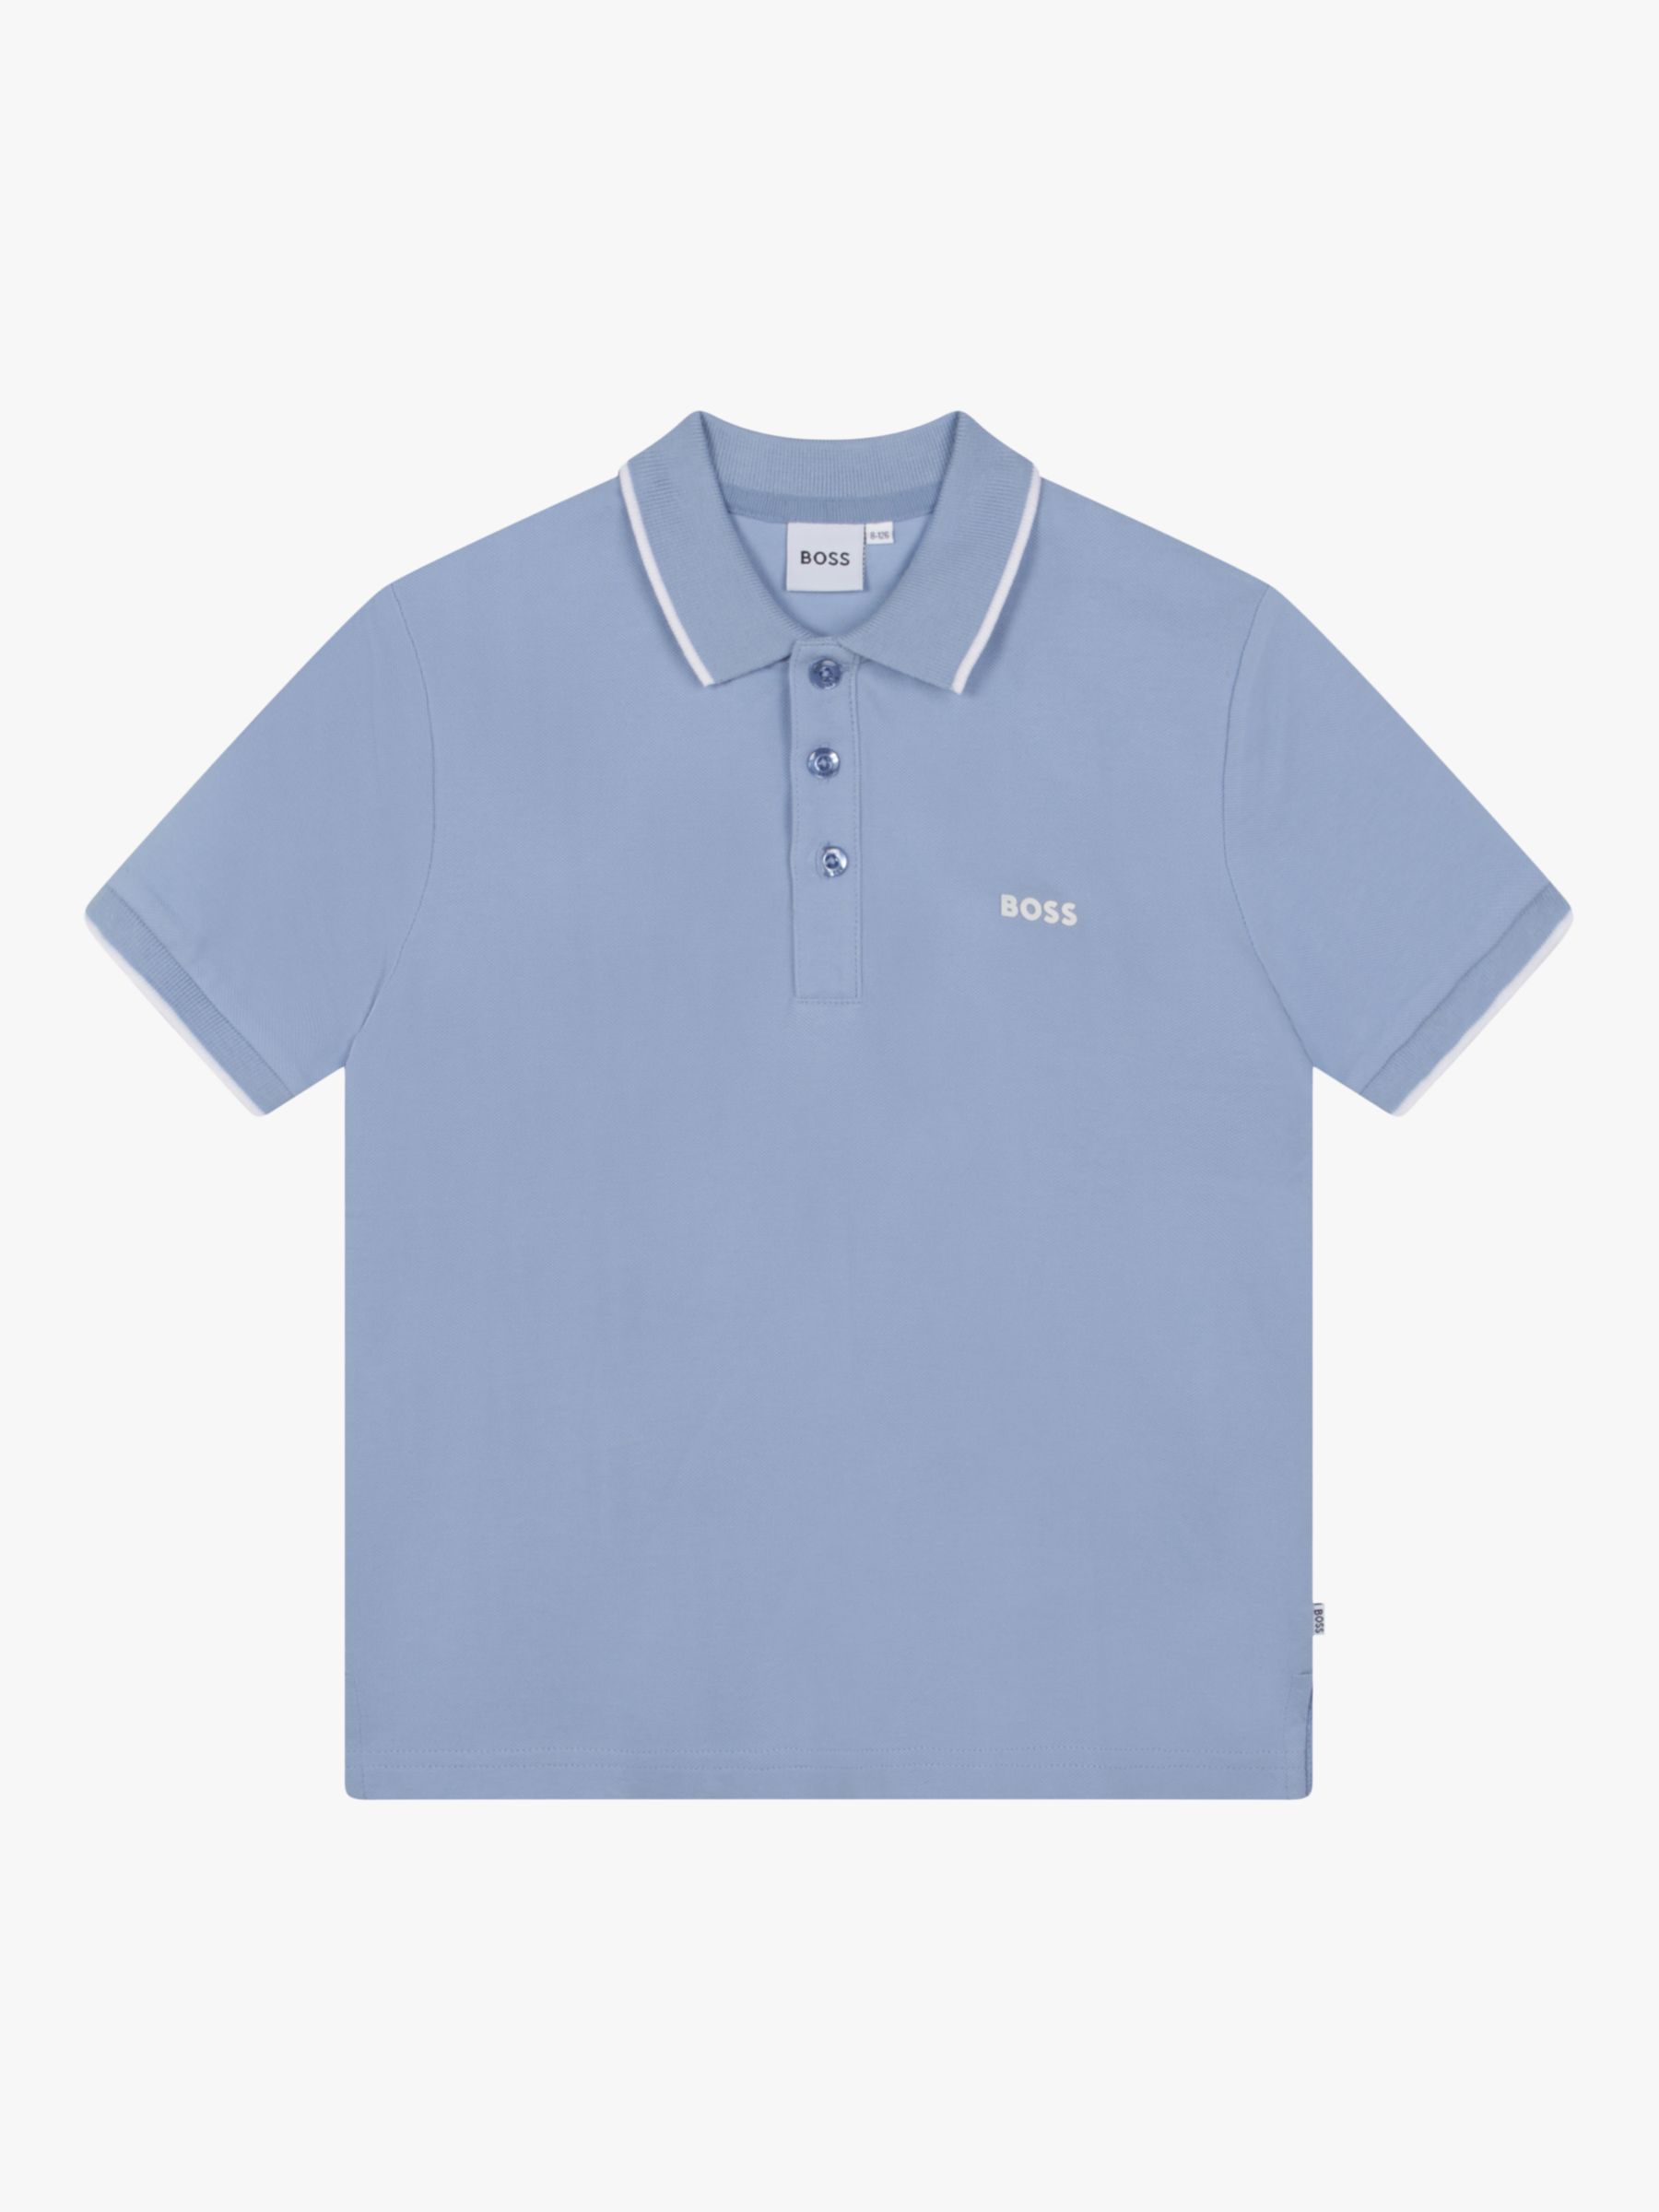 HUGO BOSS Kids' Short Sleeve Cotton Polo Shirt